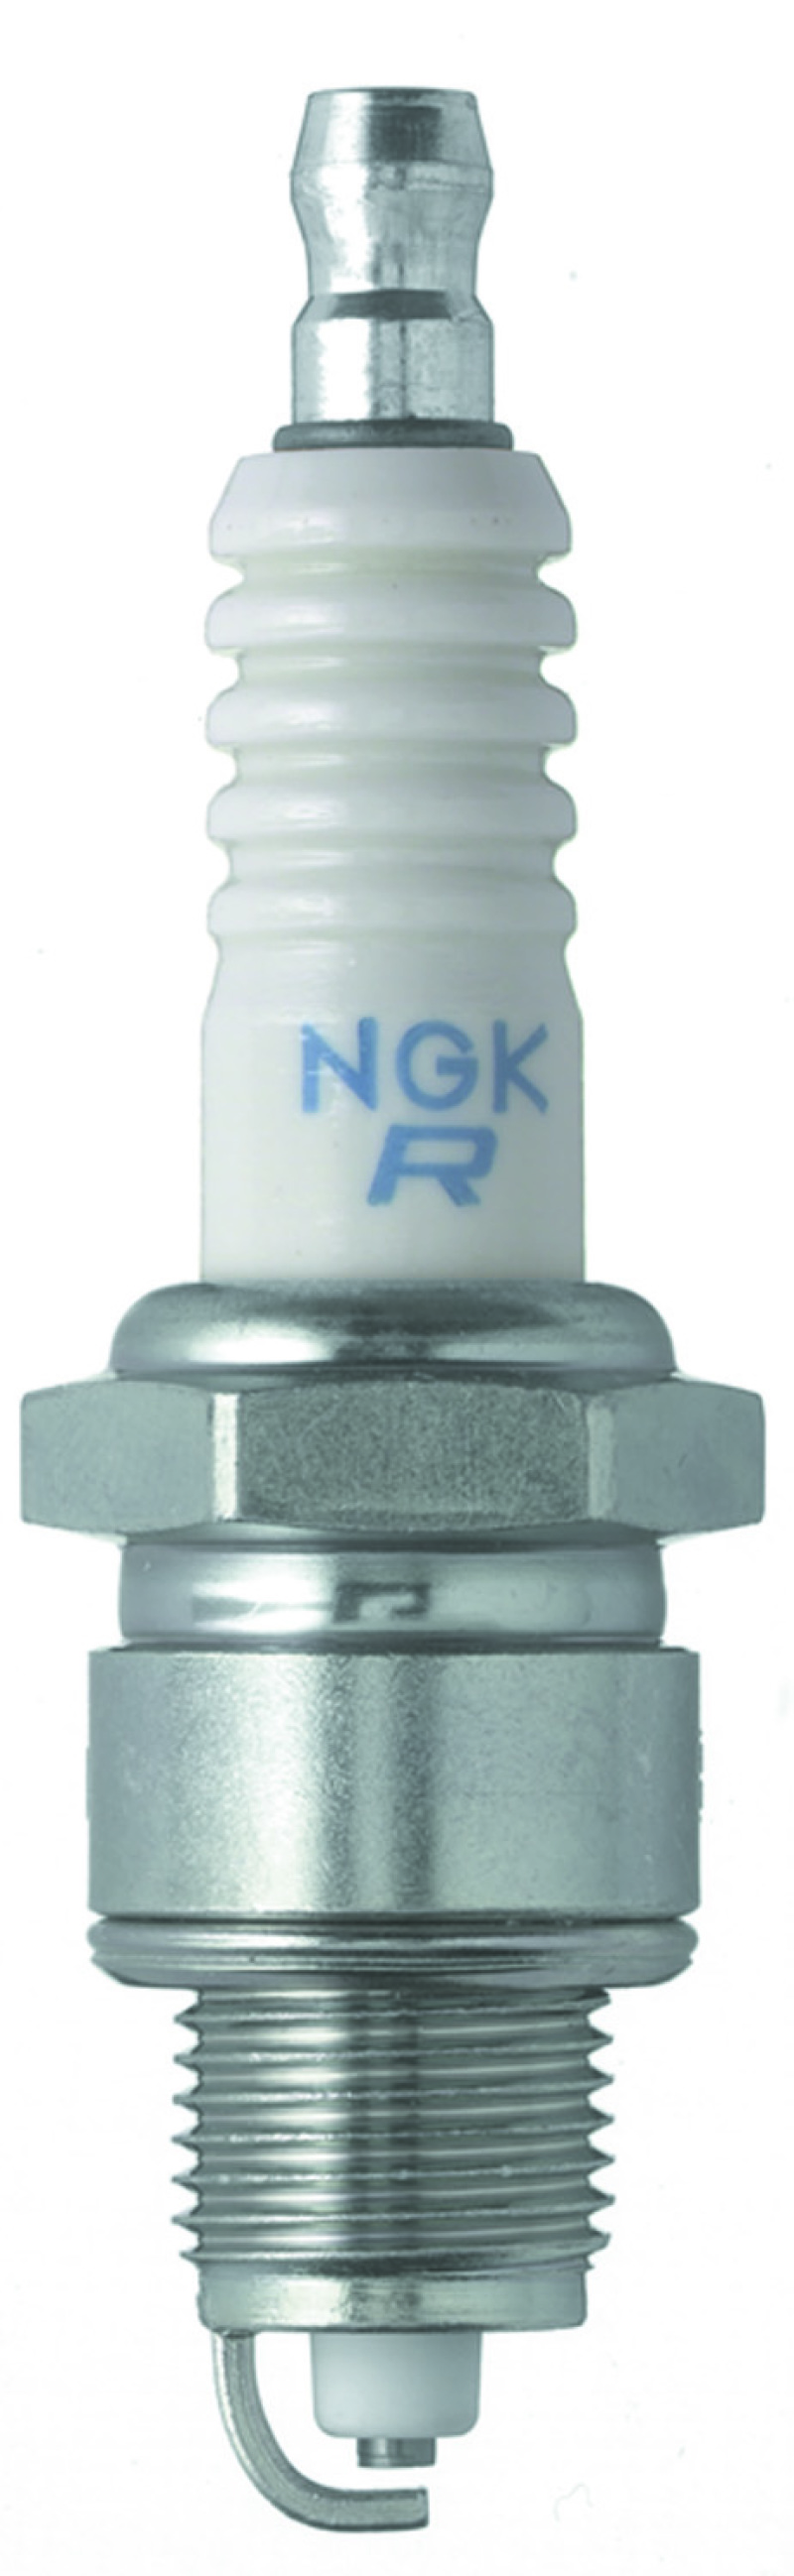 NGK Standard Spark Plug Box of 10 (BPR6HS) - 7022